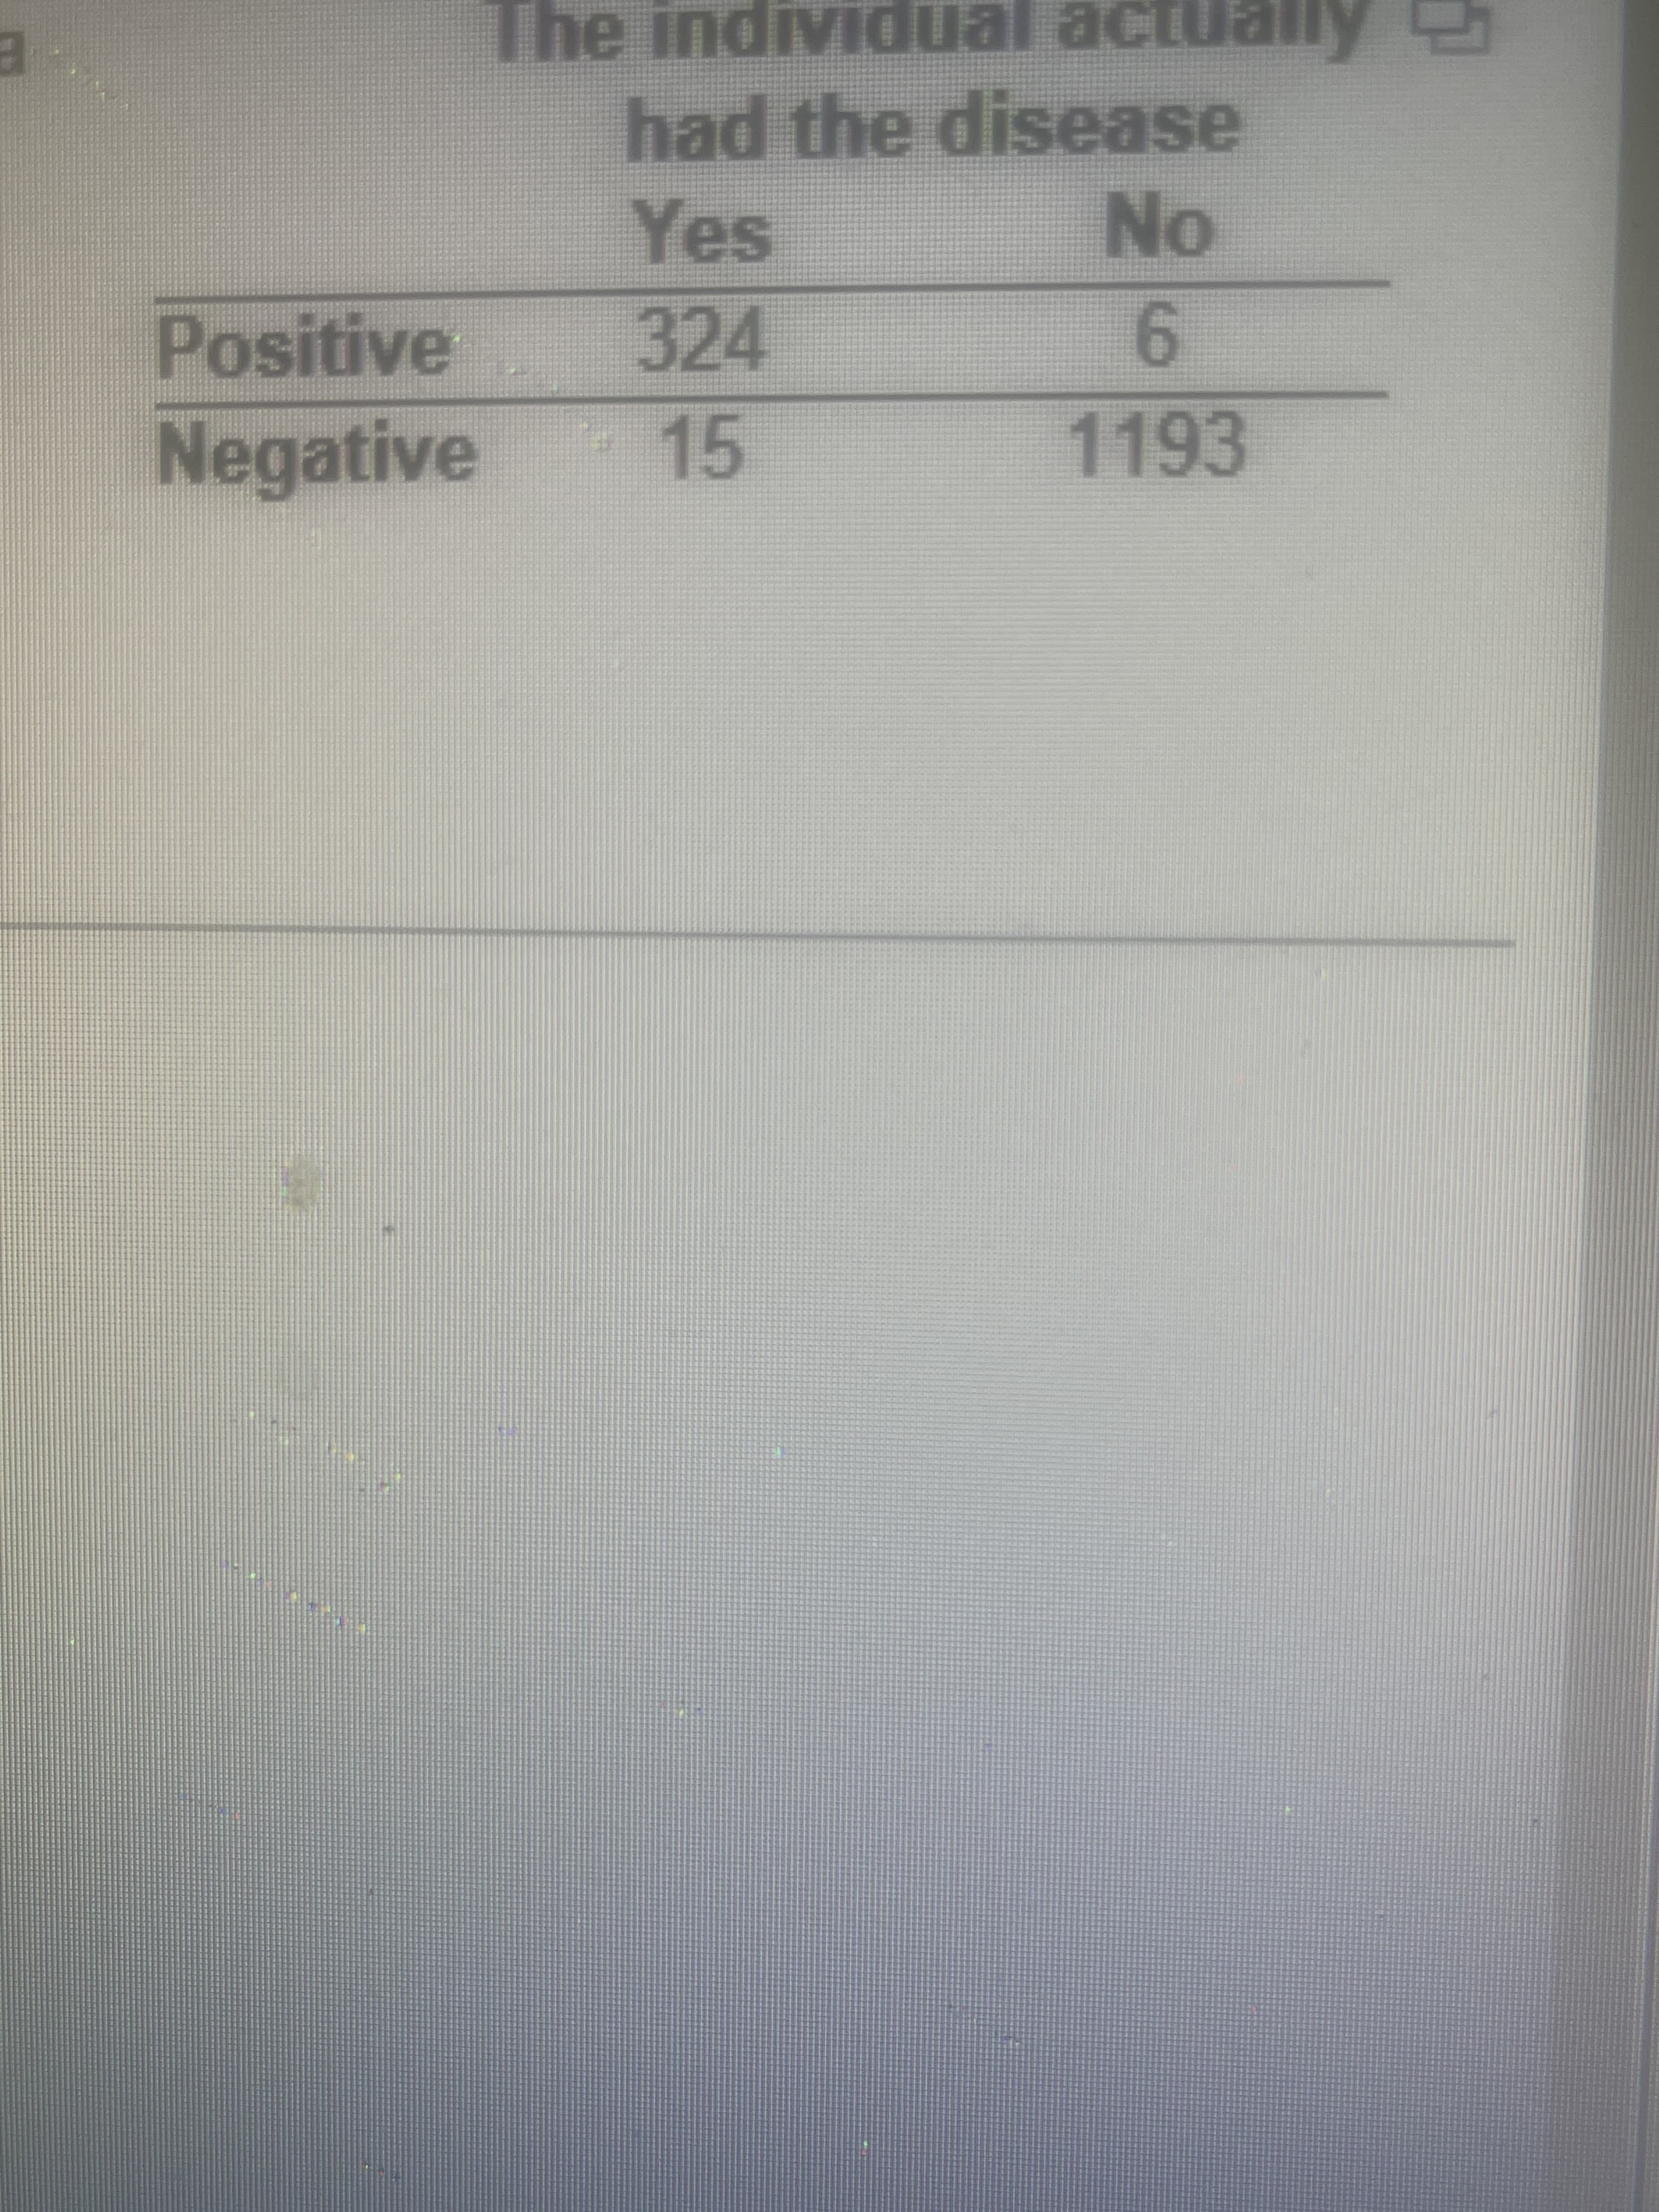 emoe jenDIAIpui ayI
had the disease
Yes
No.
9.
1193
Positive
324
Negative
15
